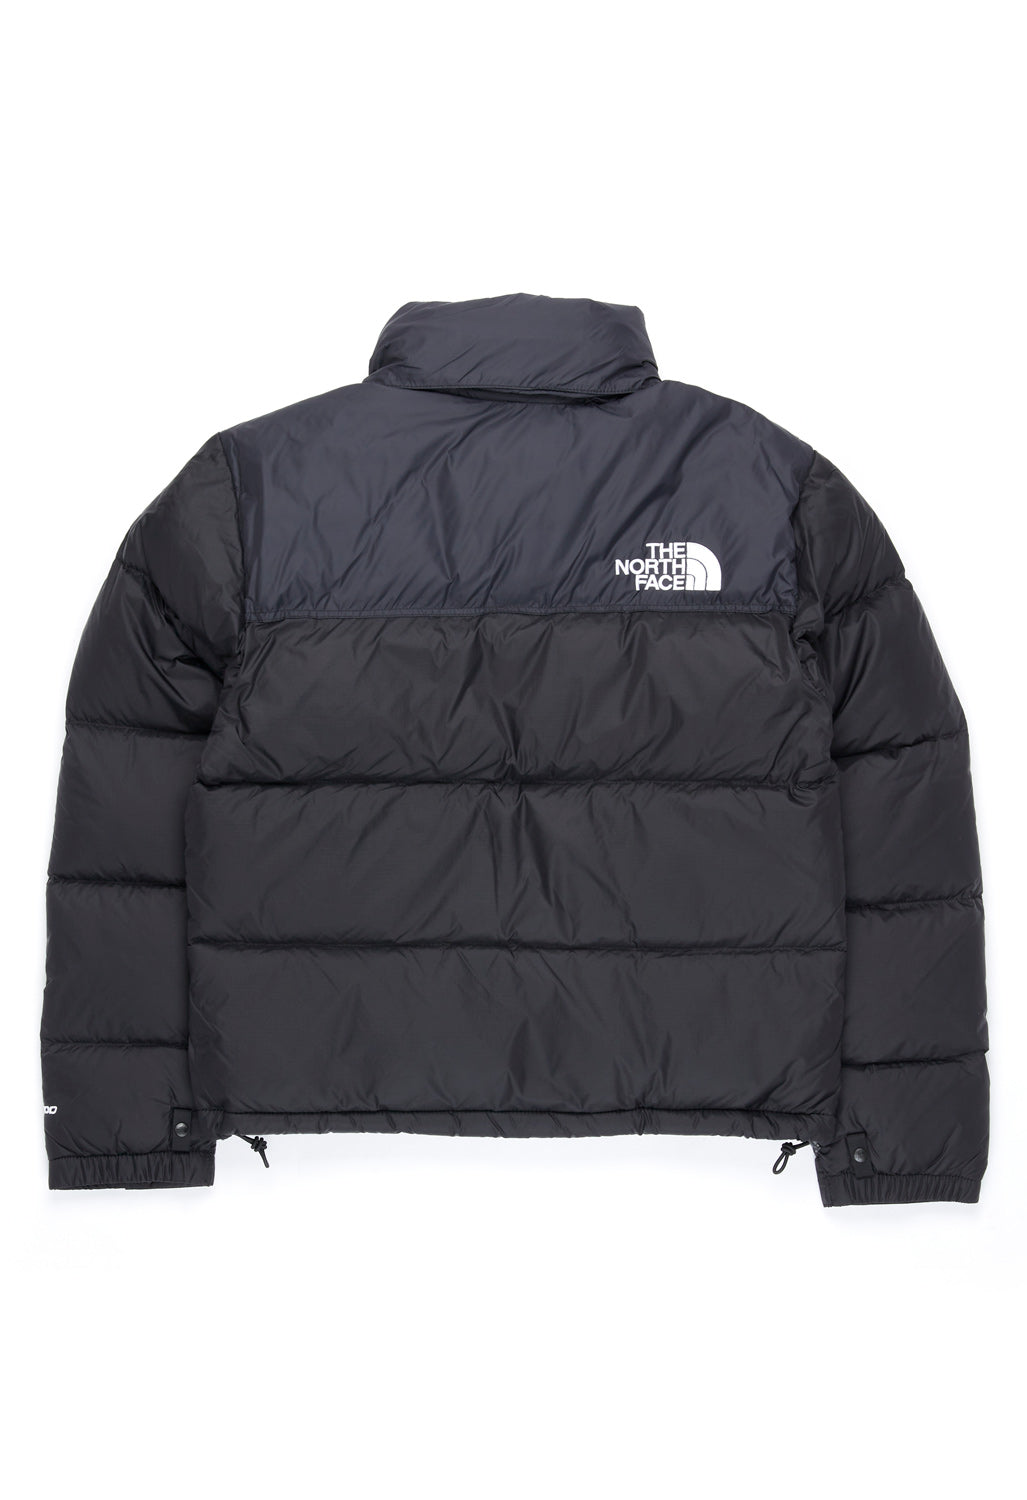 The North Face 1996 Retro Nuptse Women's Jacket - TNF Black